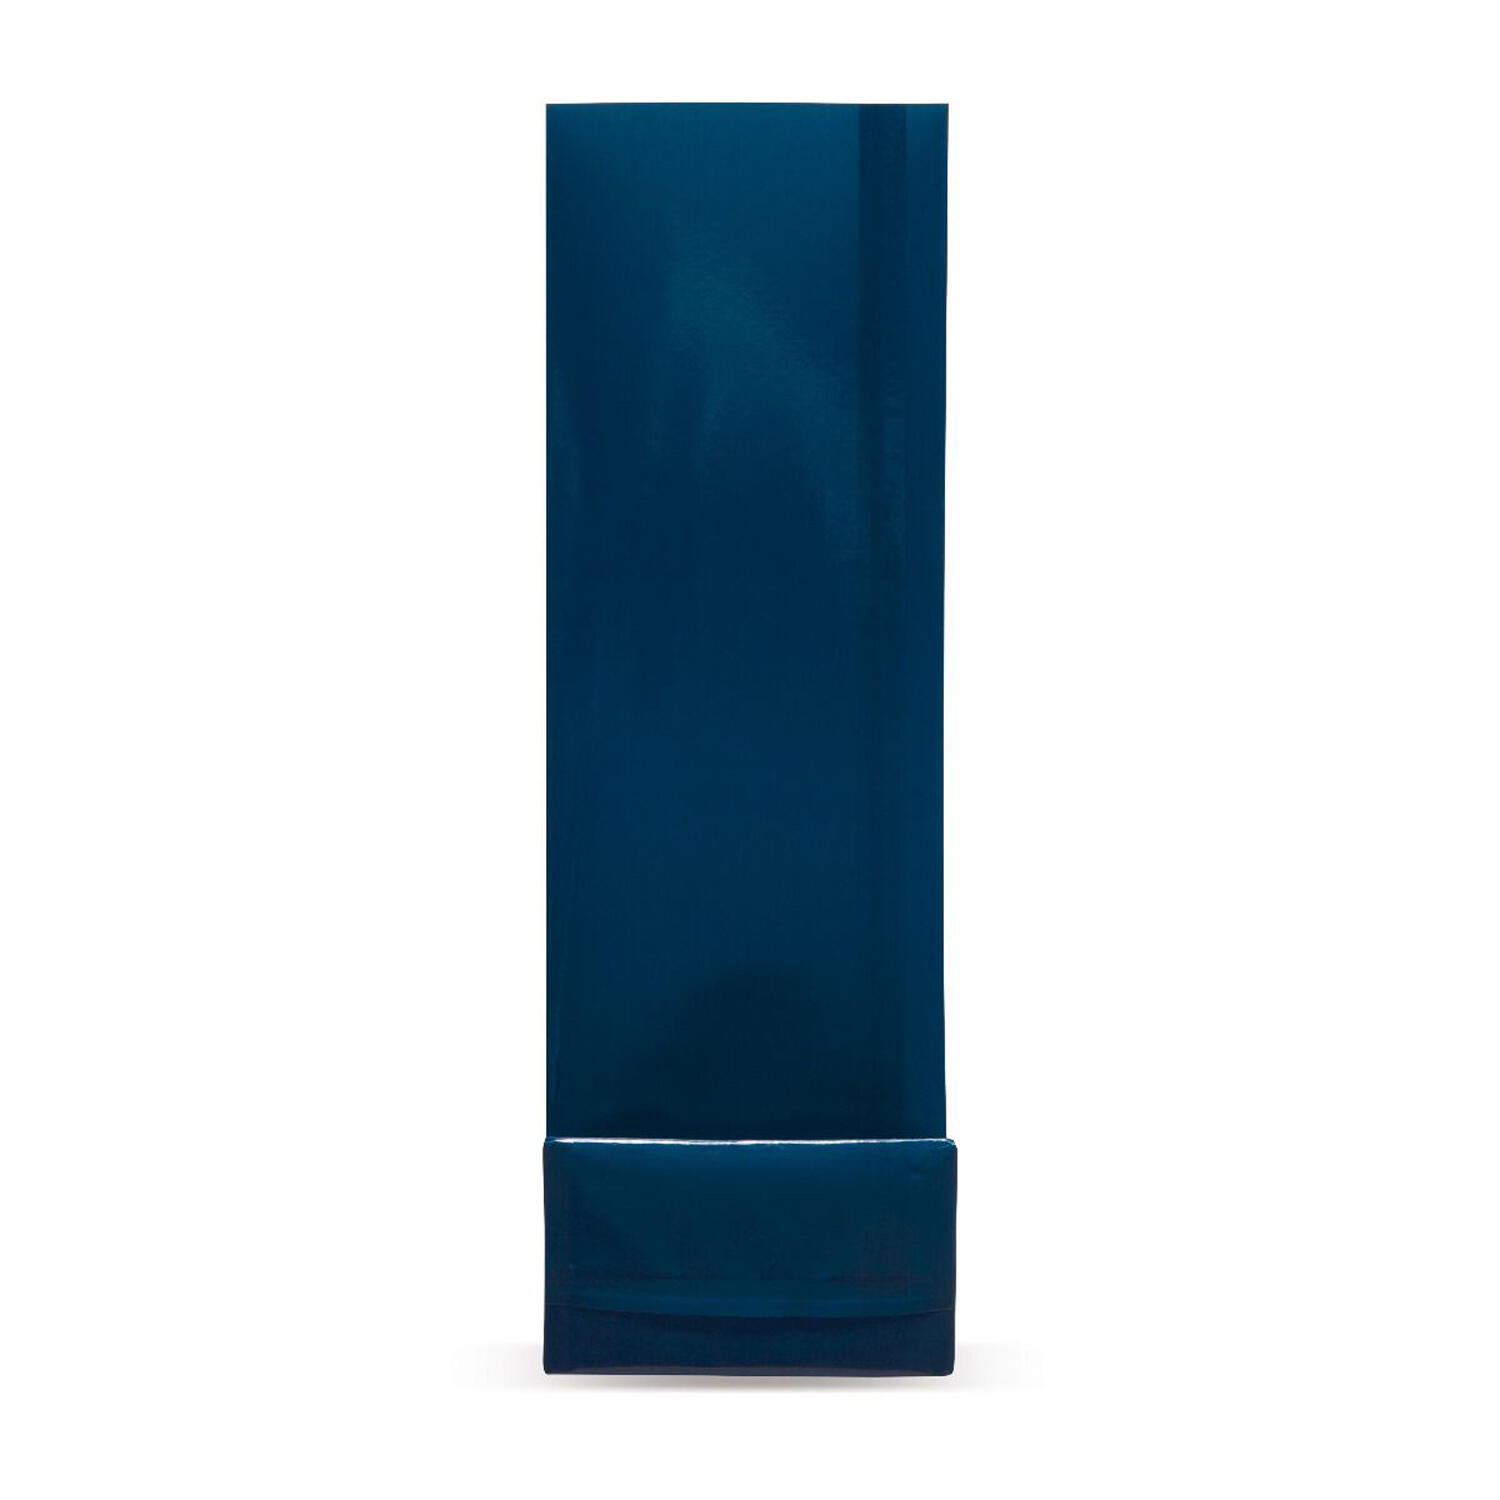 Blockbodenbeutel Blau  80 + 50mm x 252mm 4-lagig, 500 Stk.